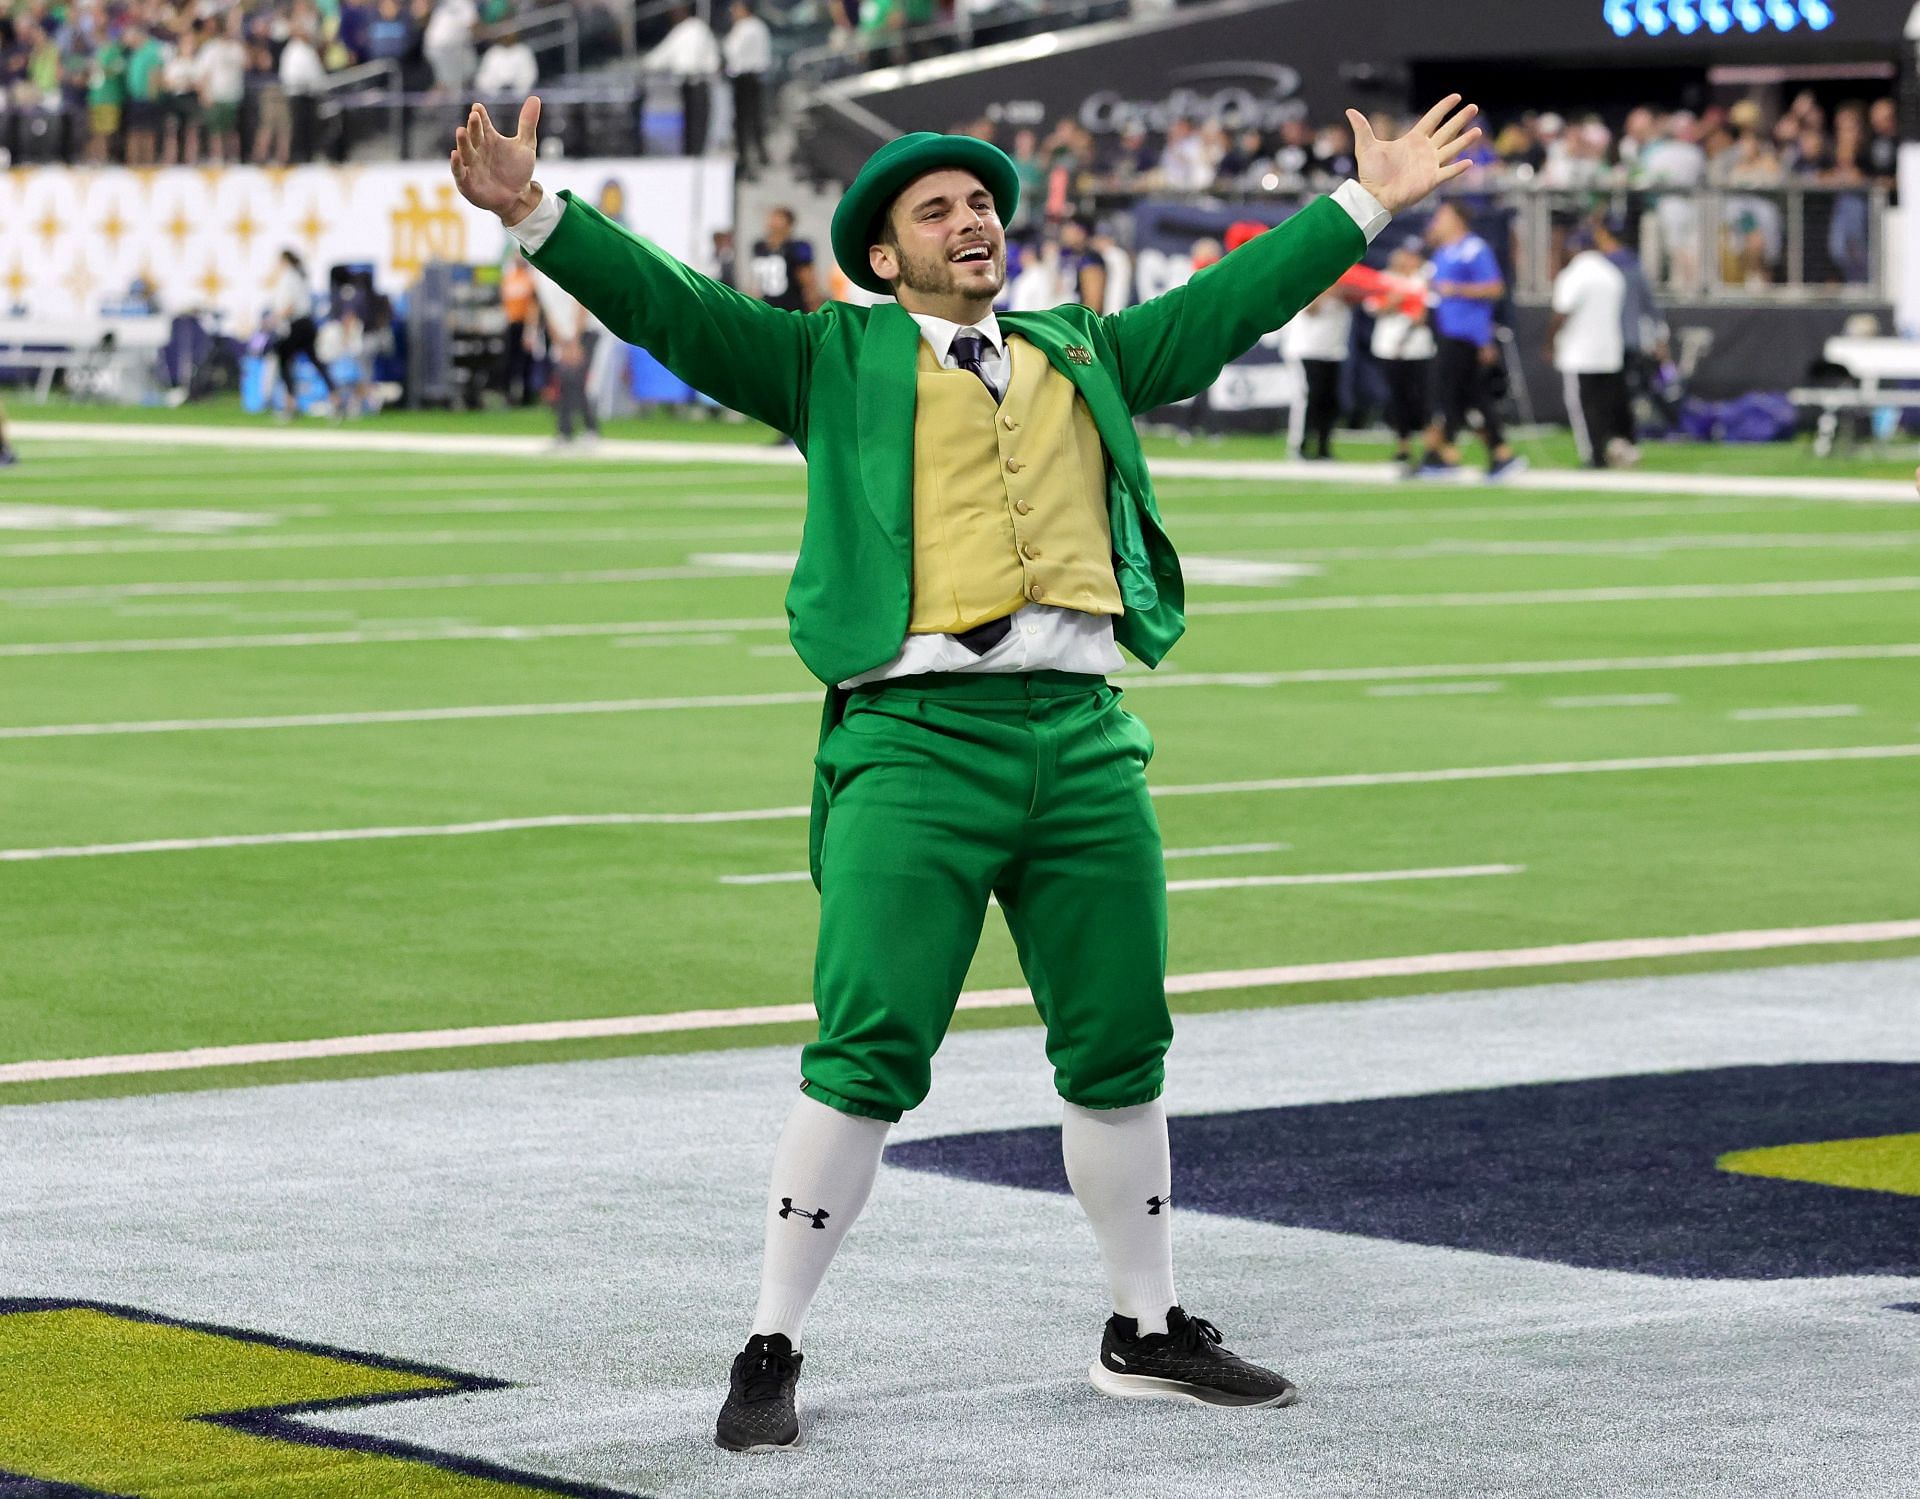 Notre Dame Fighting Irish leprechaun mascot voted one of most